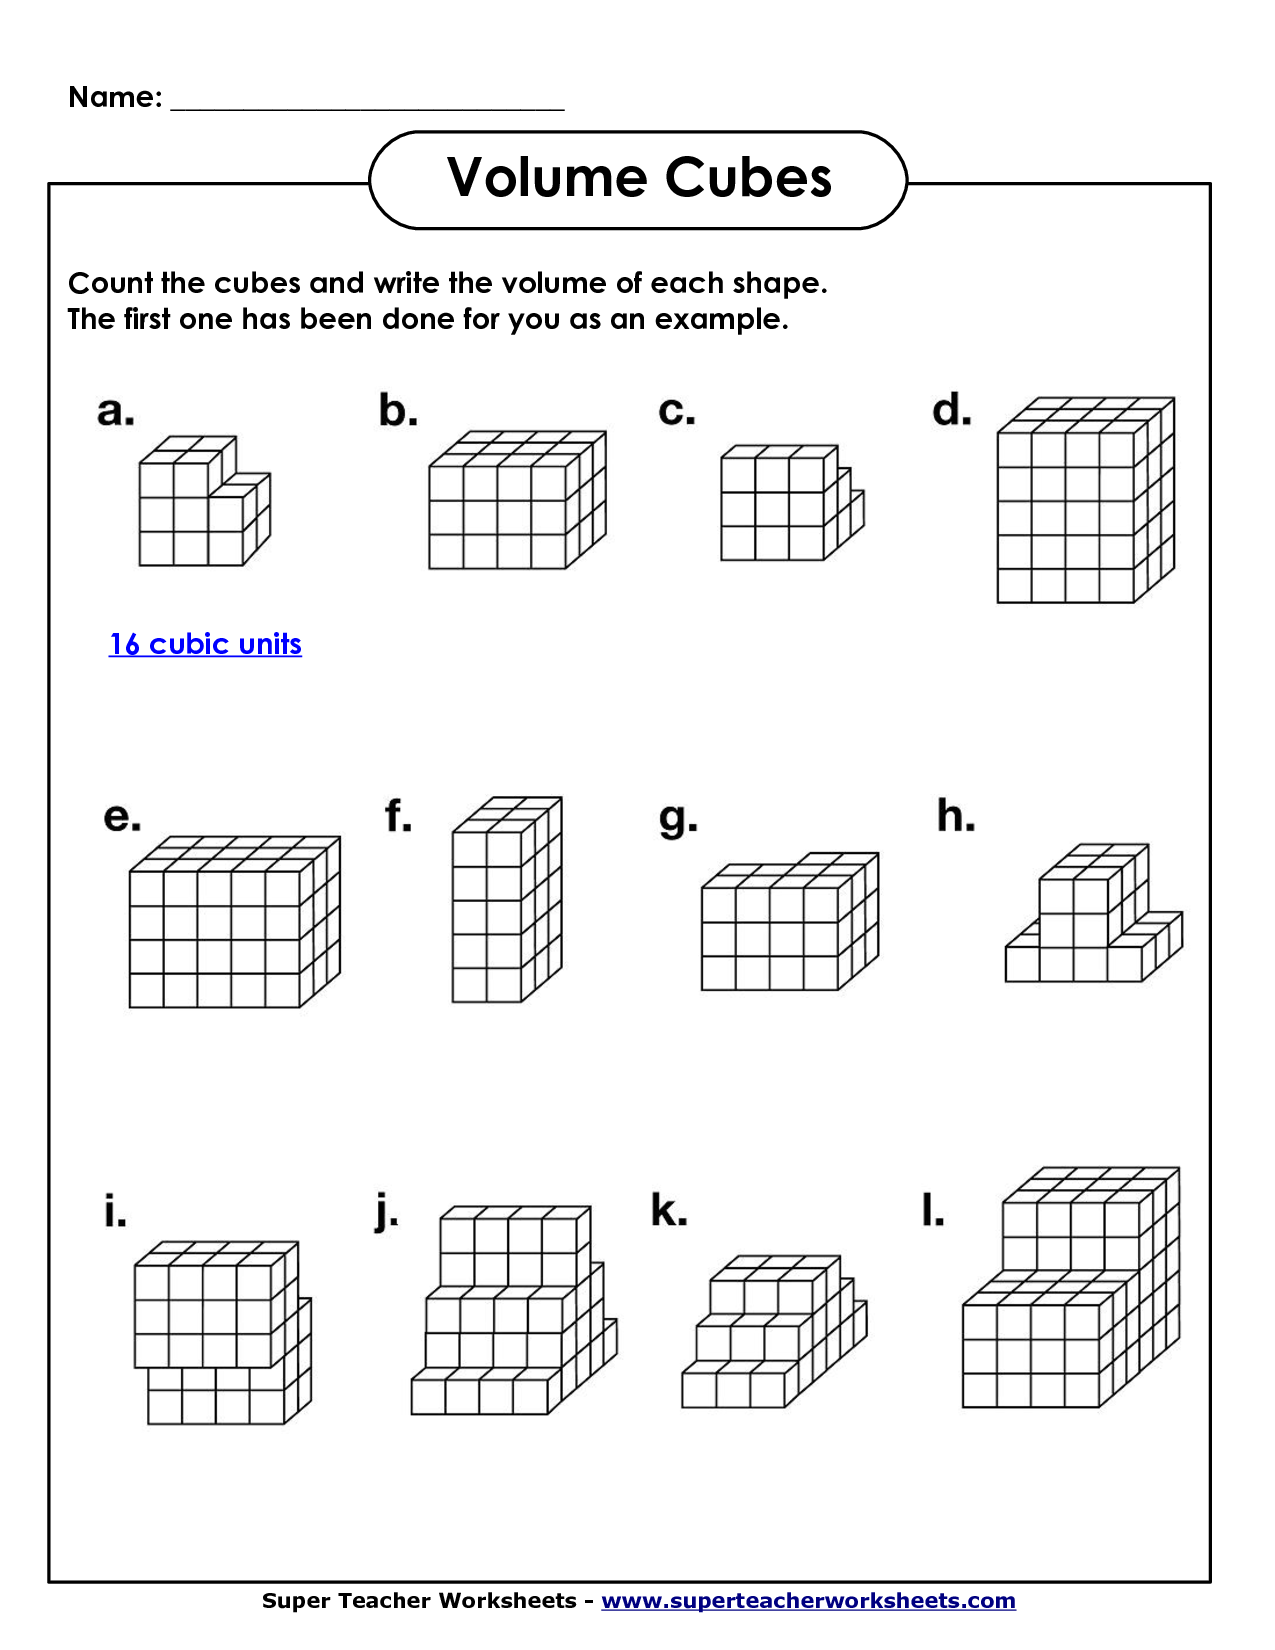 15 Best Images of Geometry Nets Worksheet - Cube Volume ...